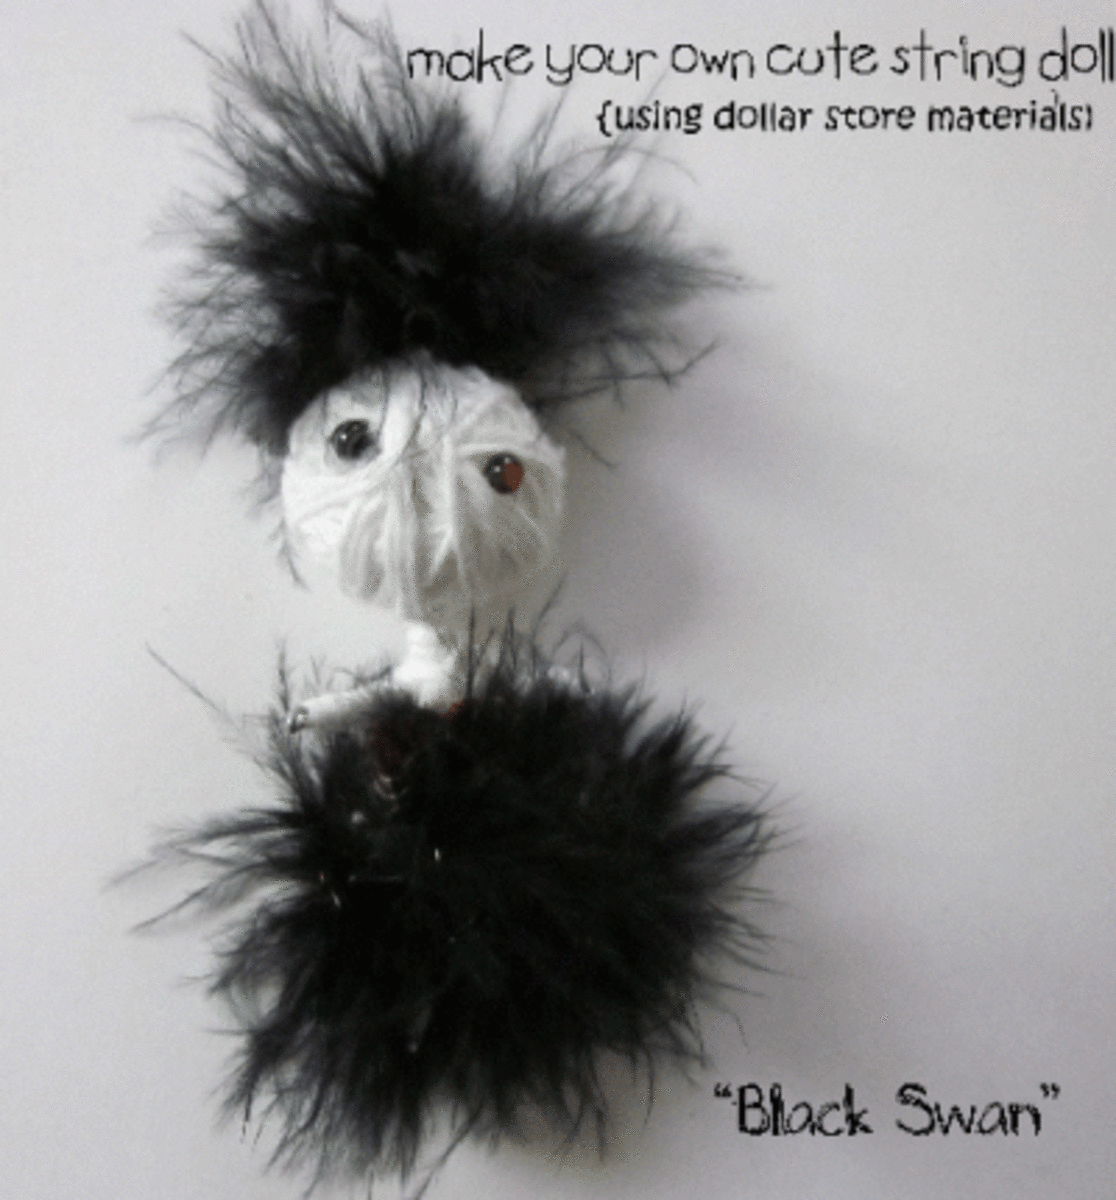 String Doll Idea #1 Black Swan, Just add feathers!